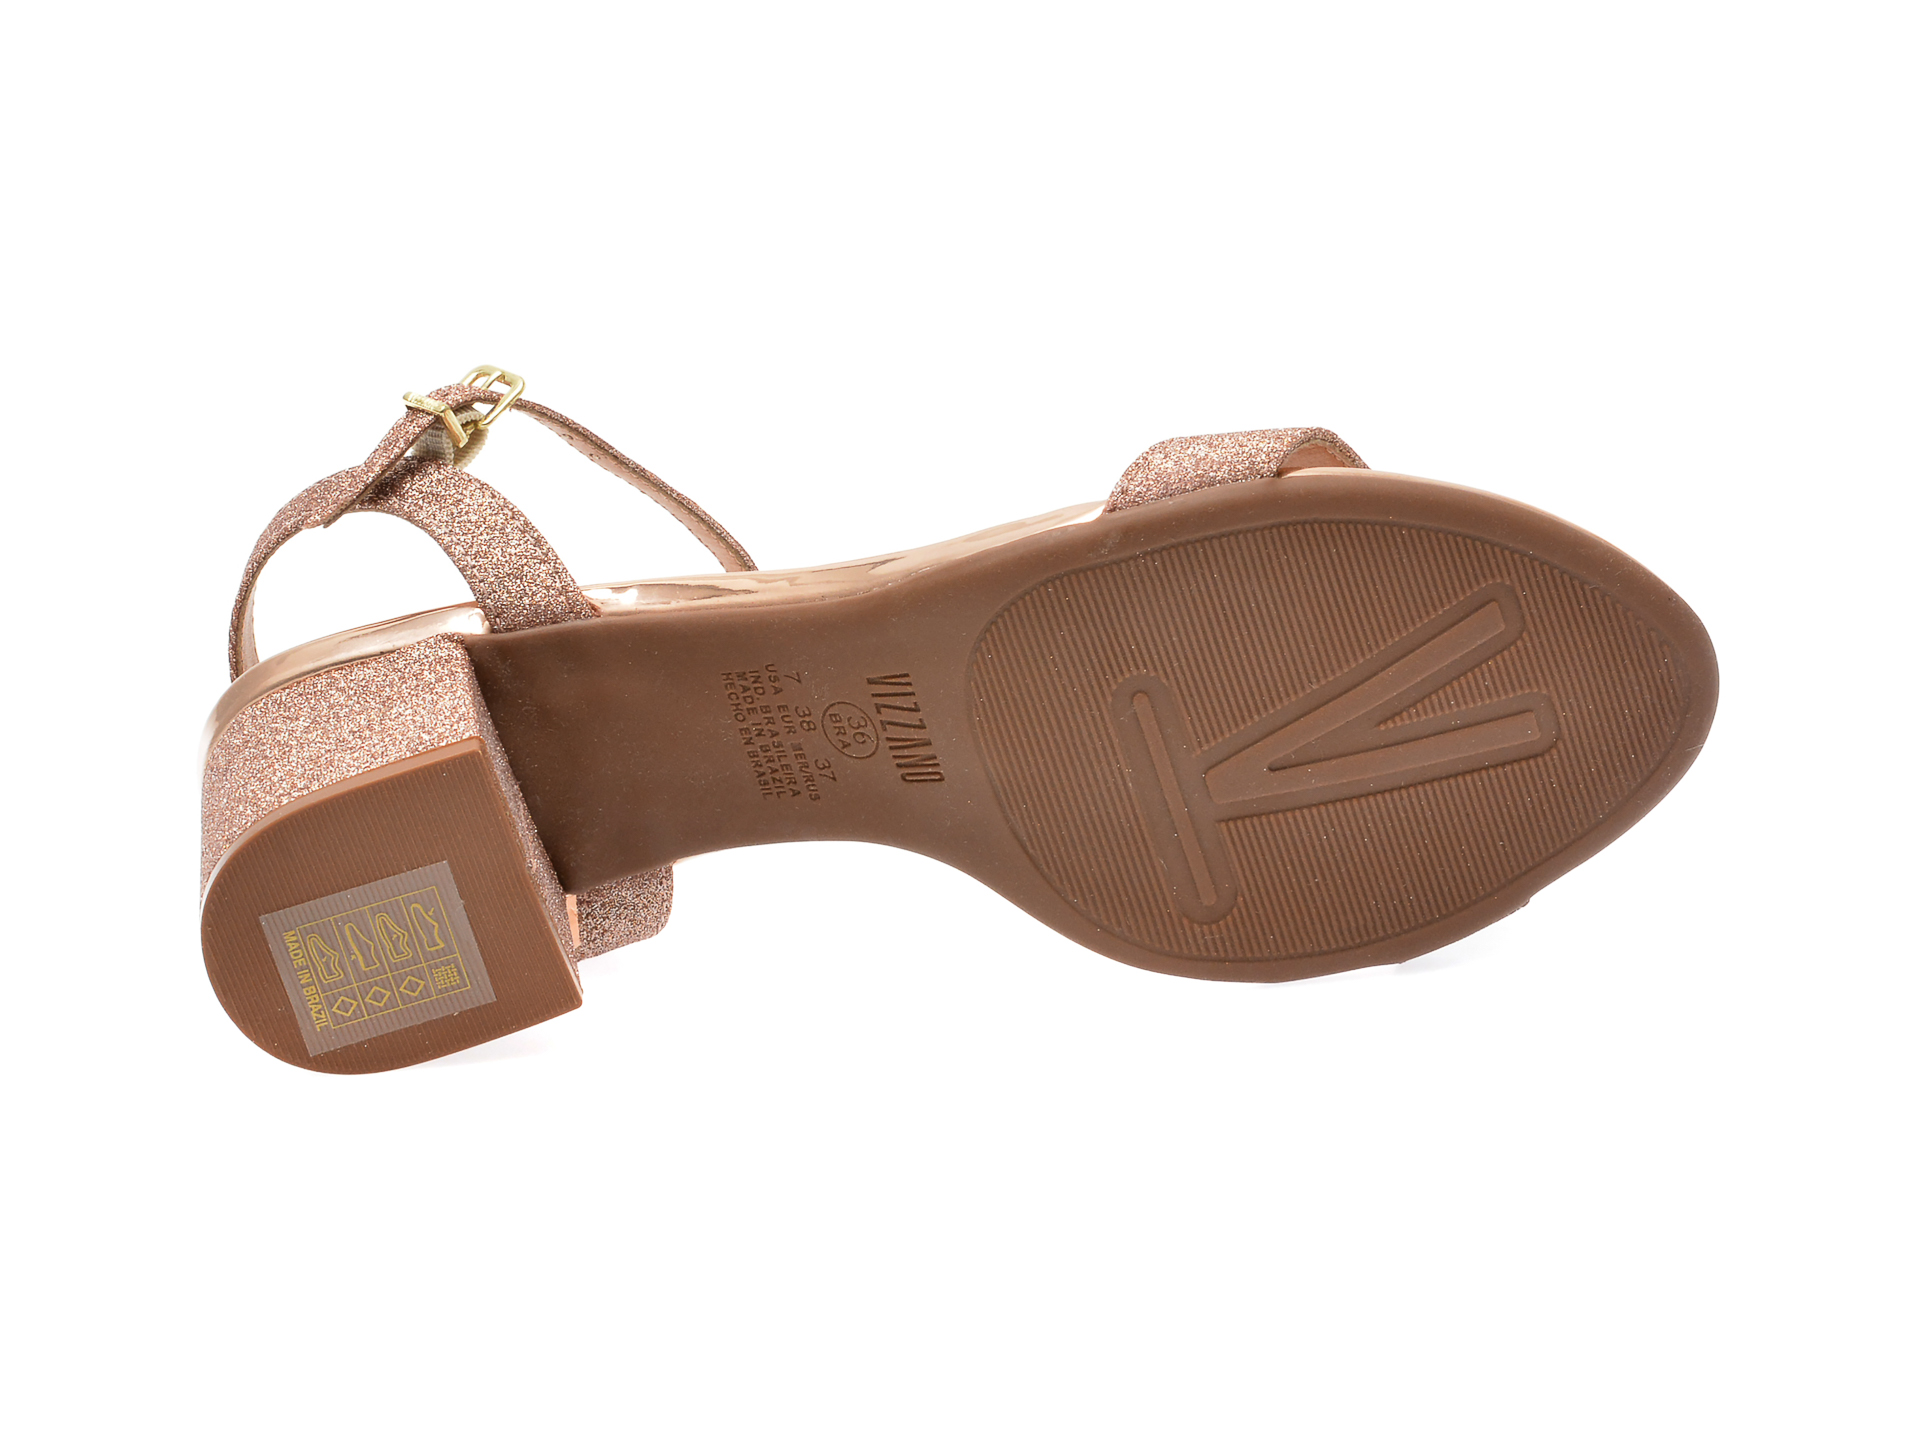 Sandale VIZZANO bronz, 6291900, din piele ecologica